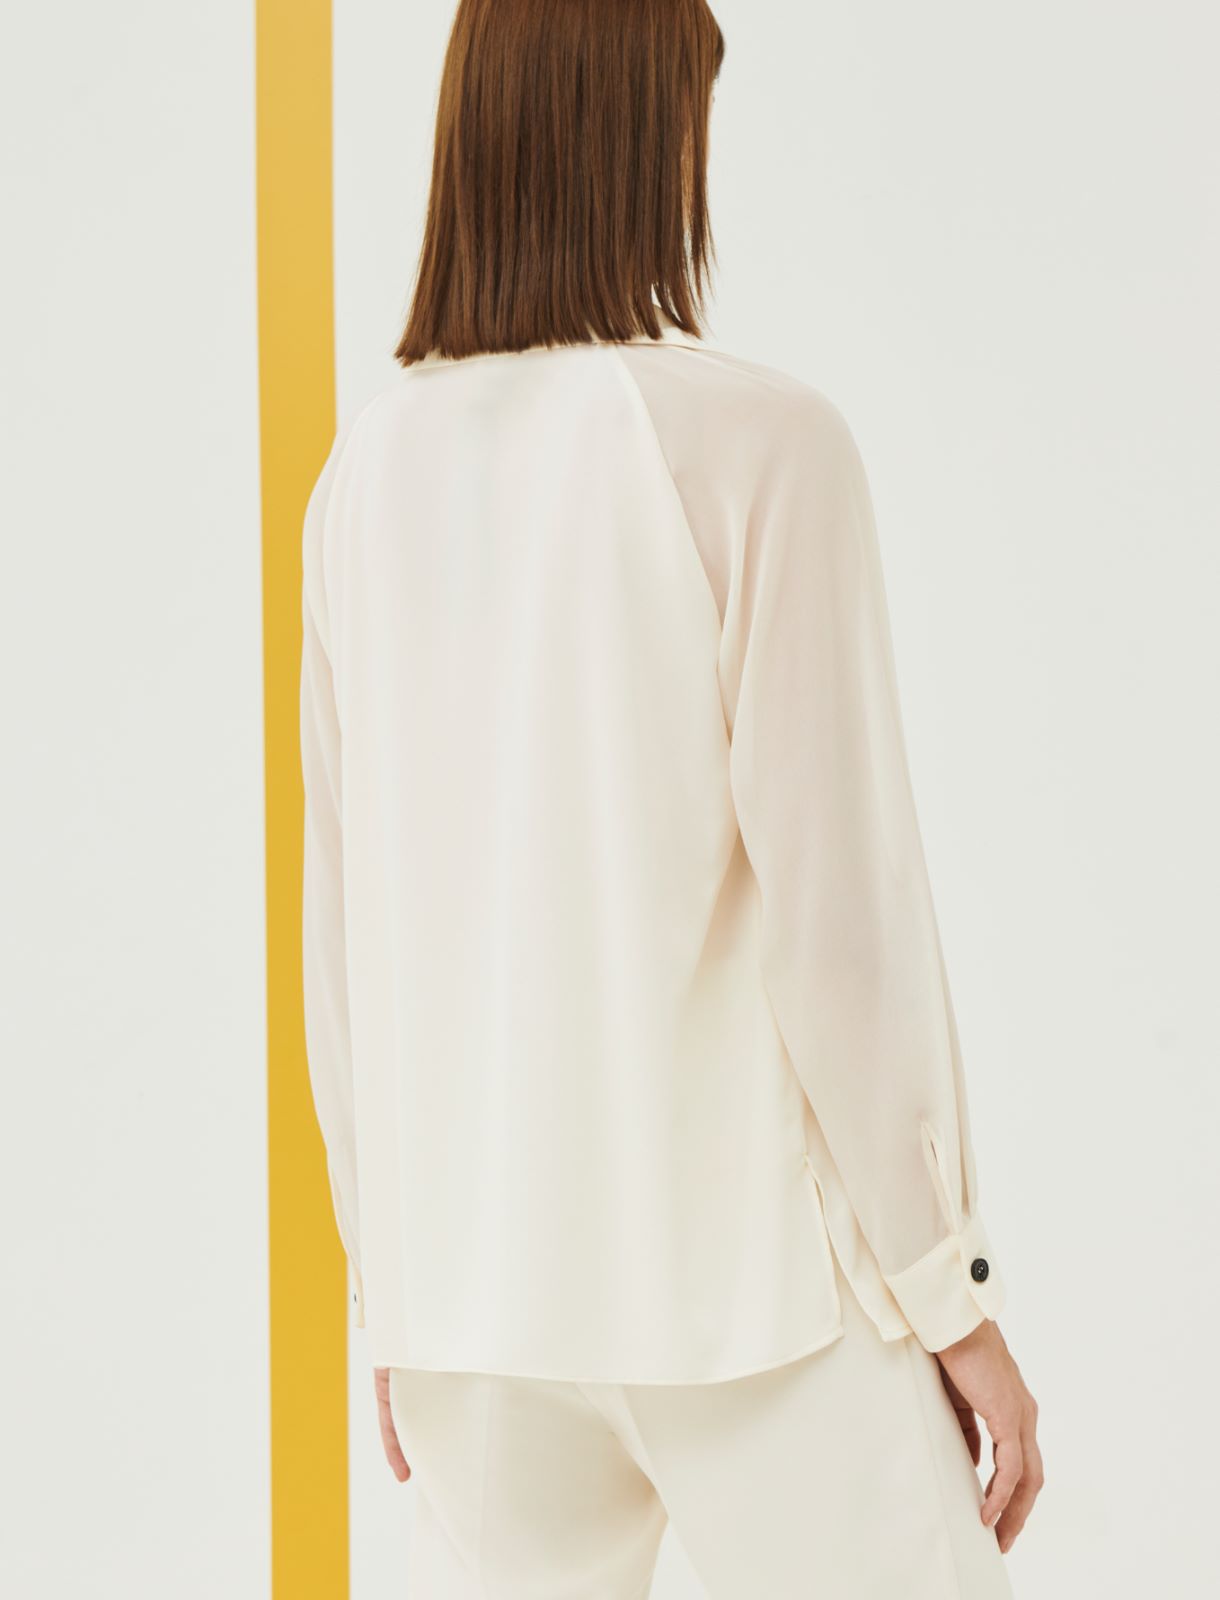 Satin blouse - Wool white - Marina Rinaldi - 2